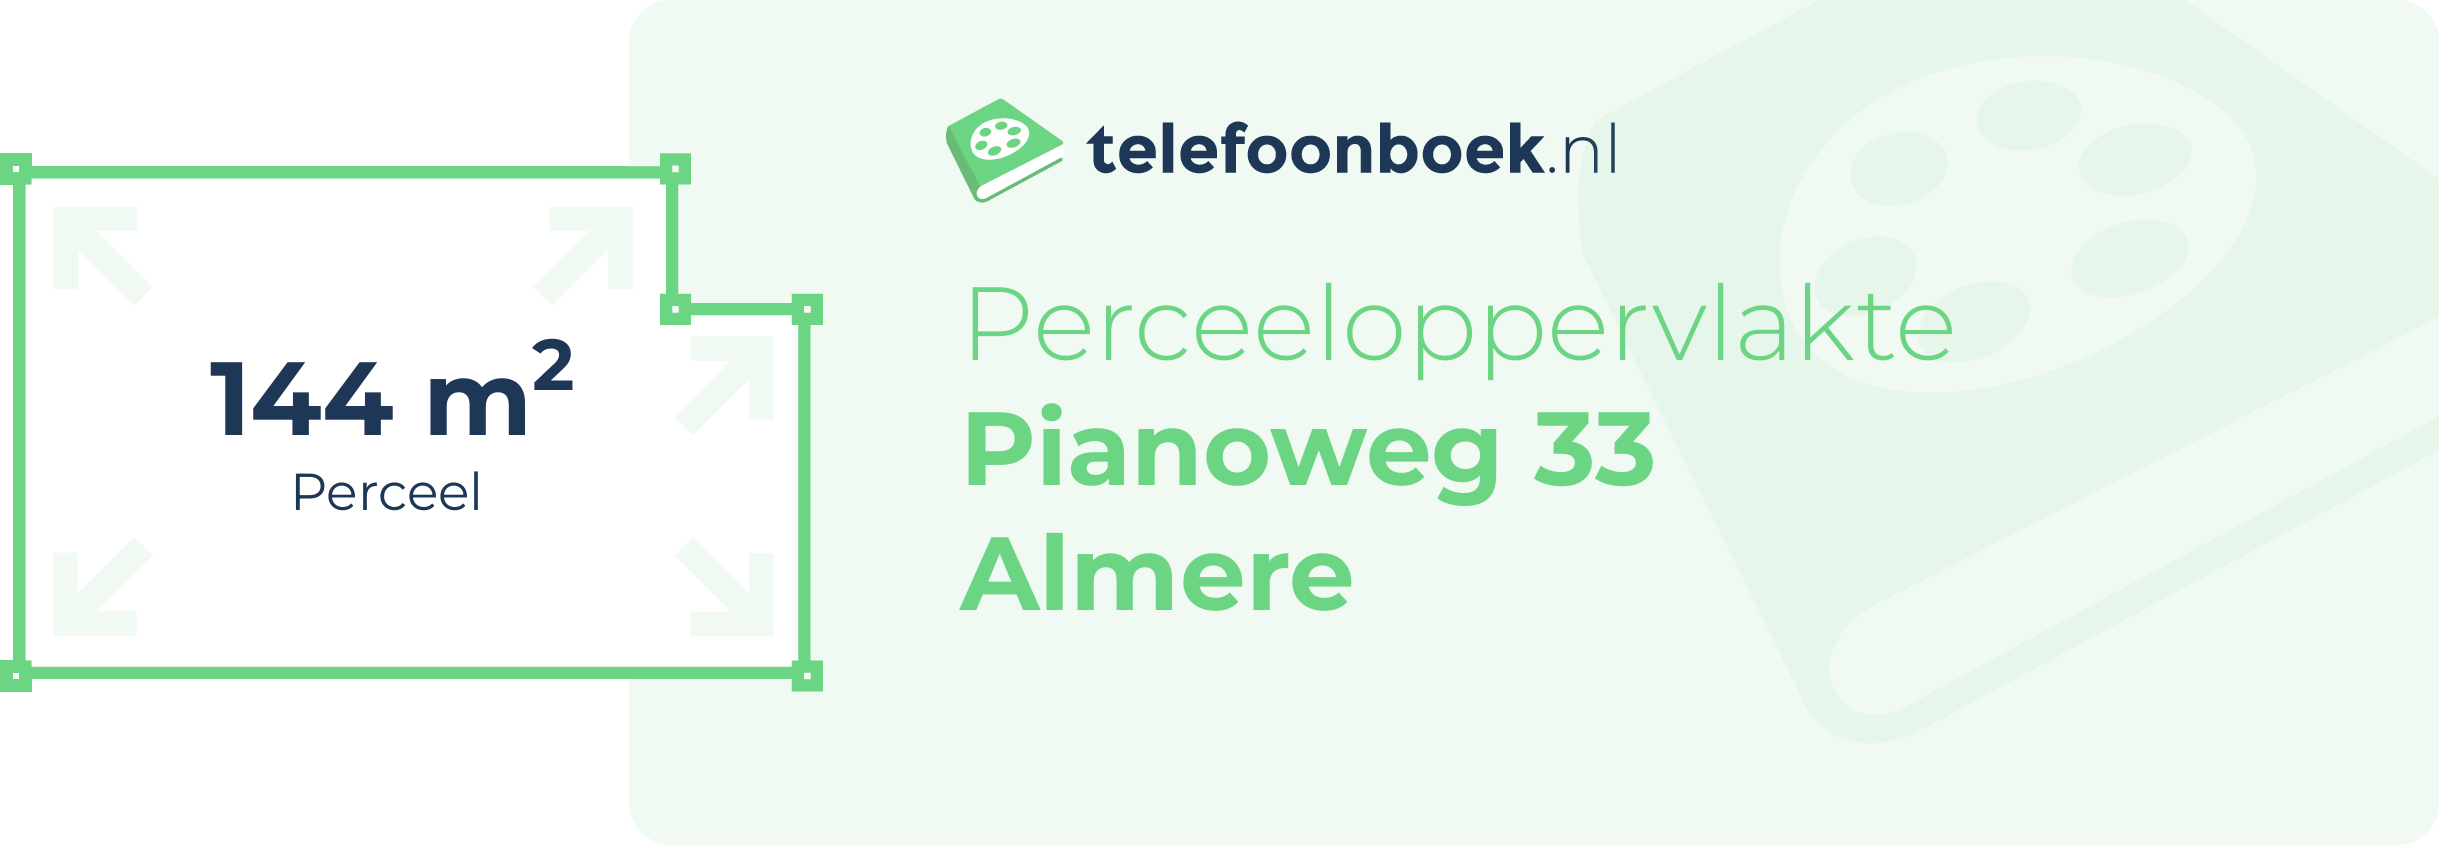 Perceeloppervlakte Pianoweg 33 Almere